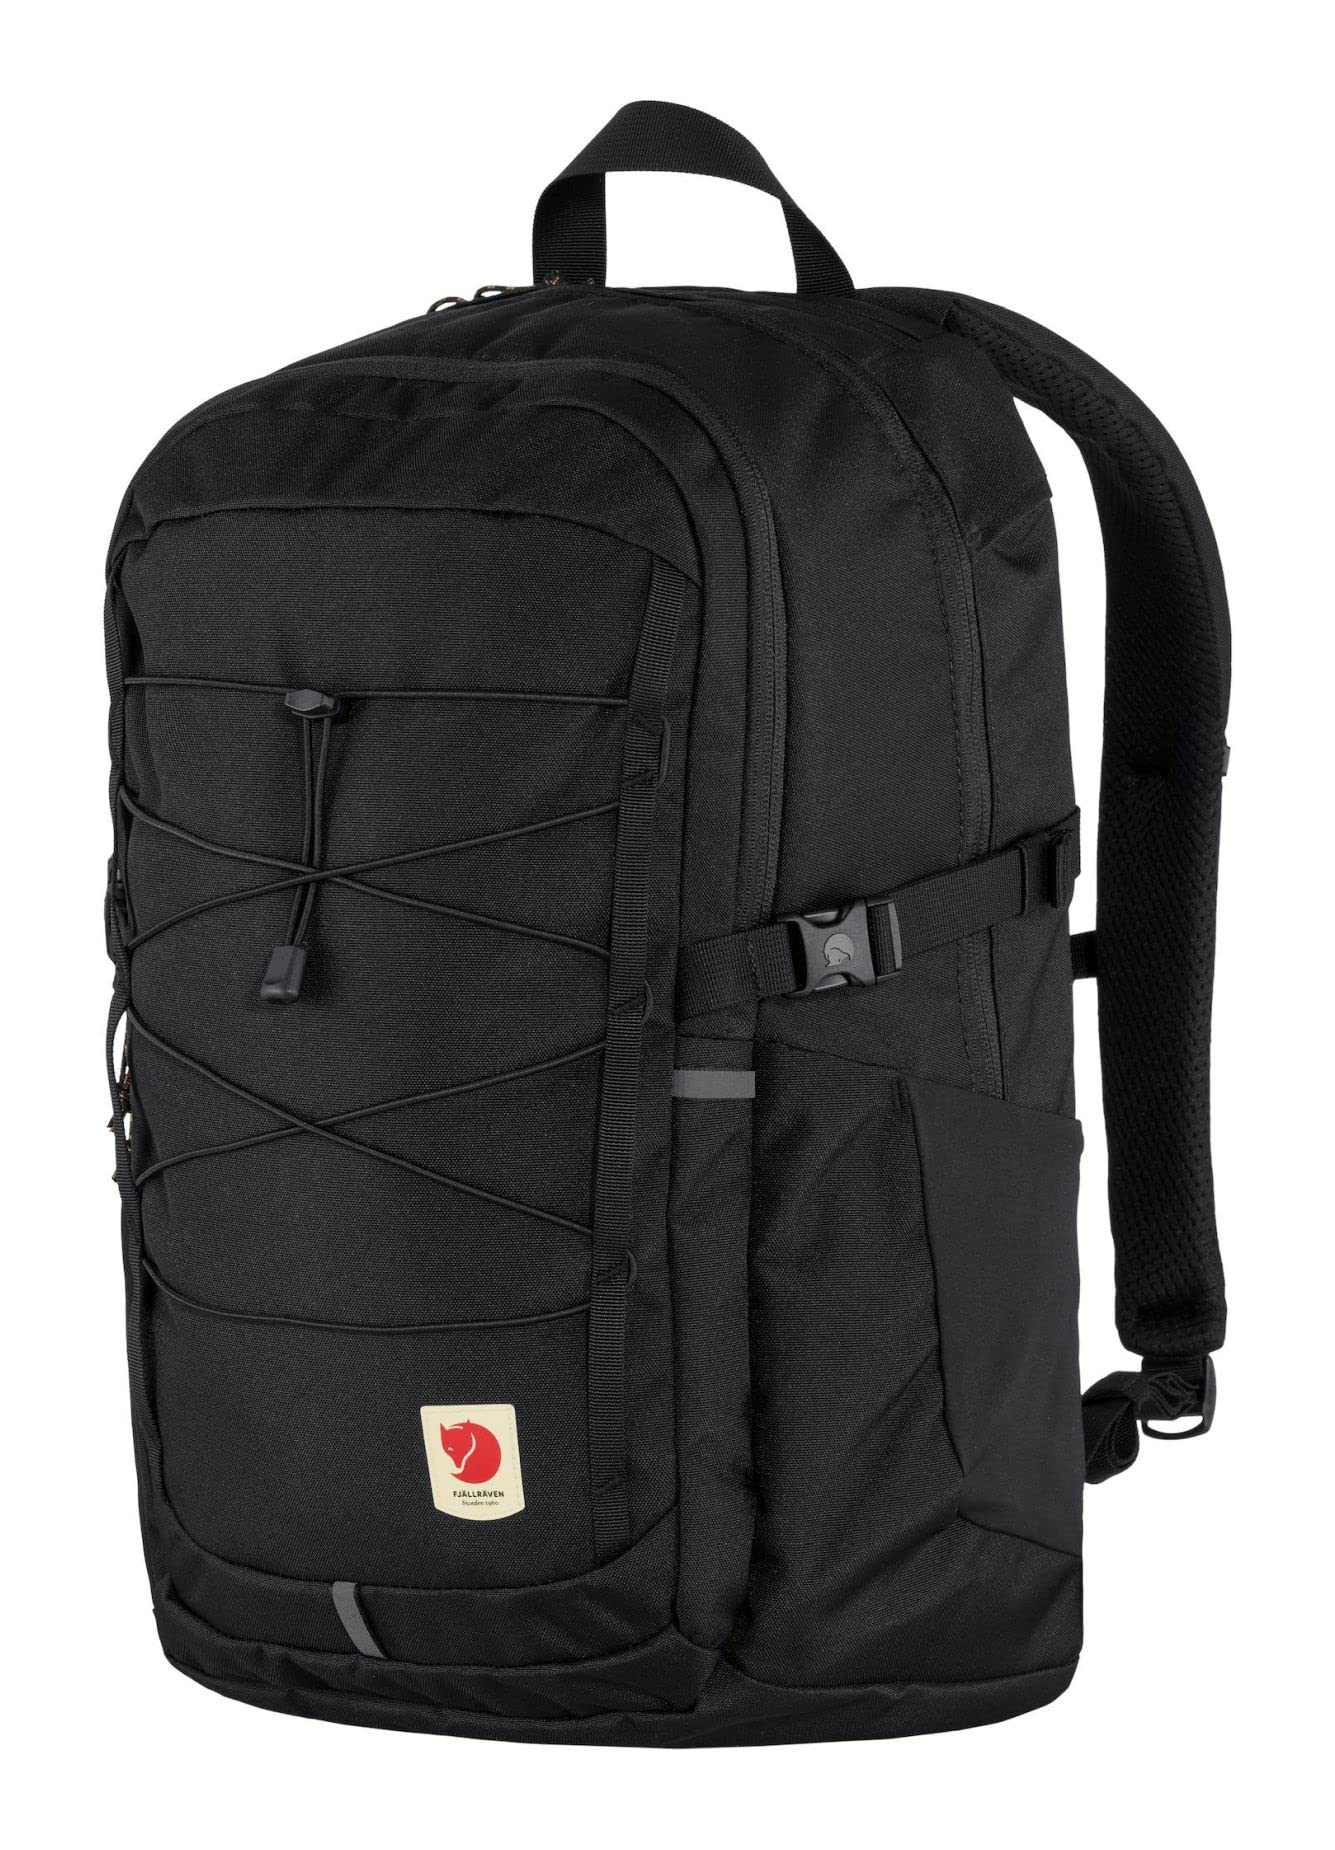 Fjallraven Women's Skule 28 Backpack, Black, One Size